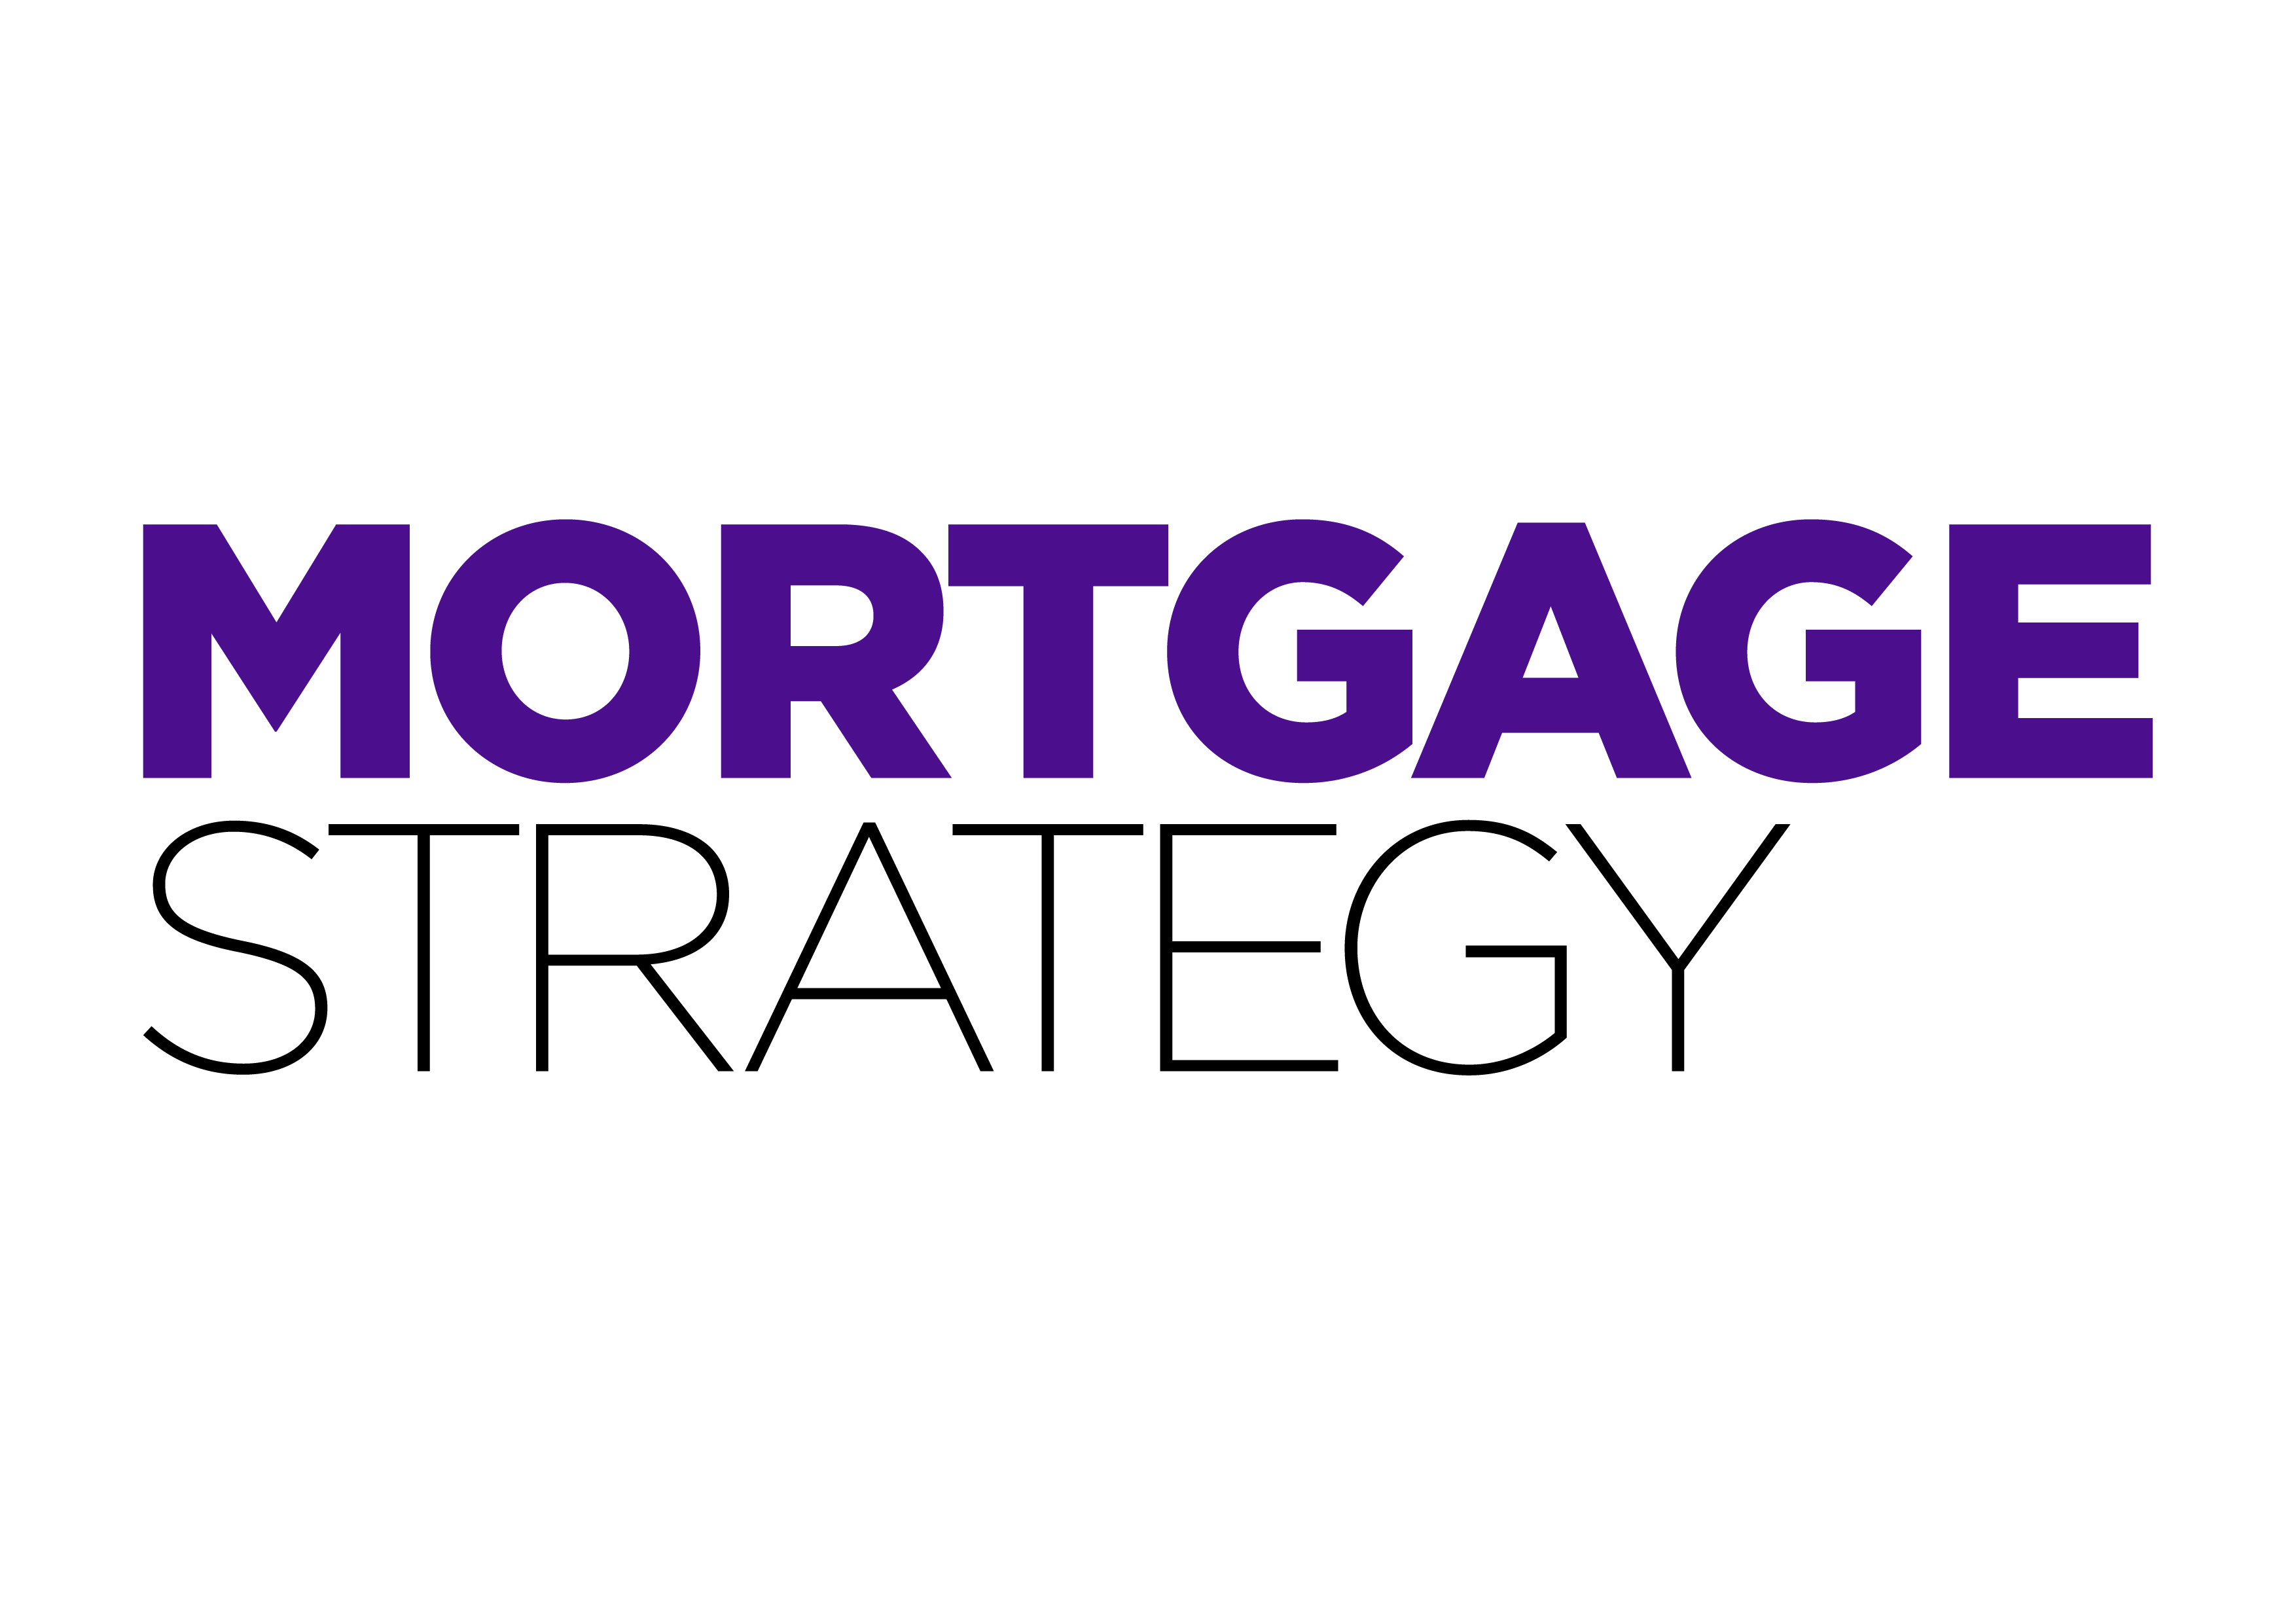 Mortgage strategy logo